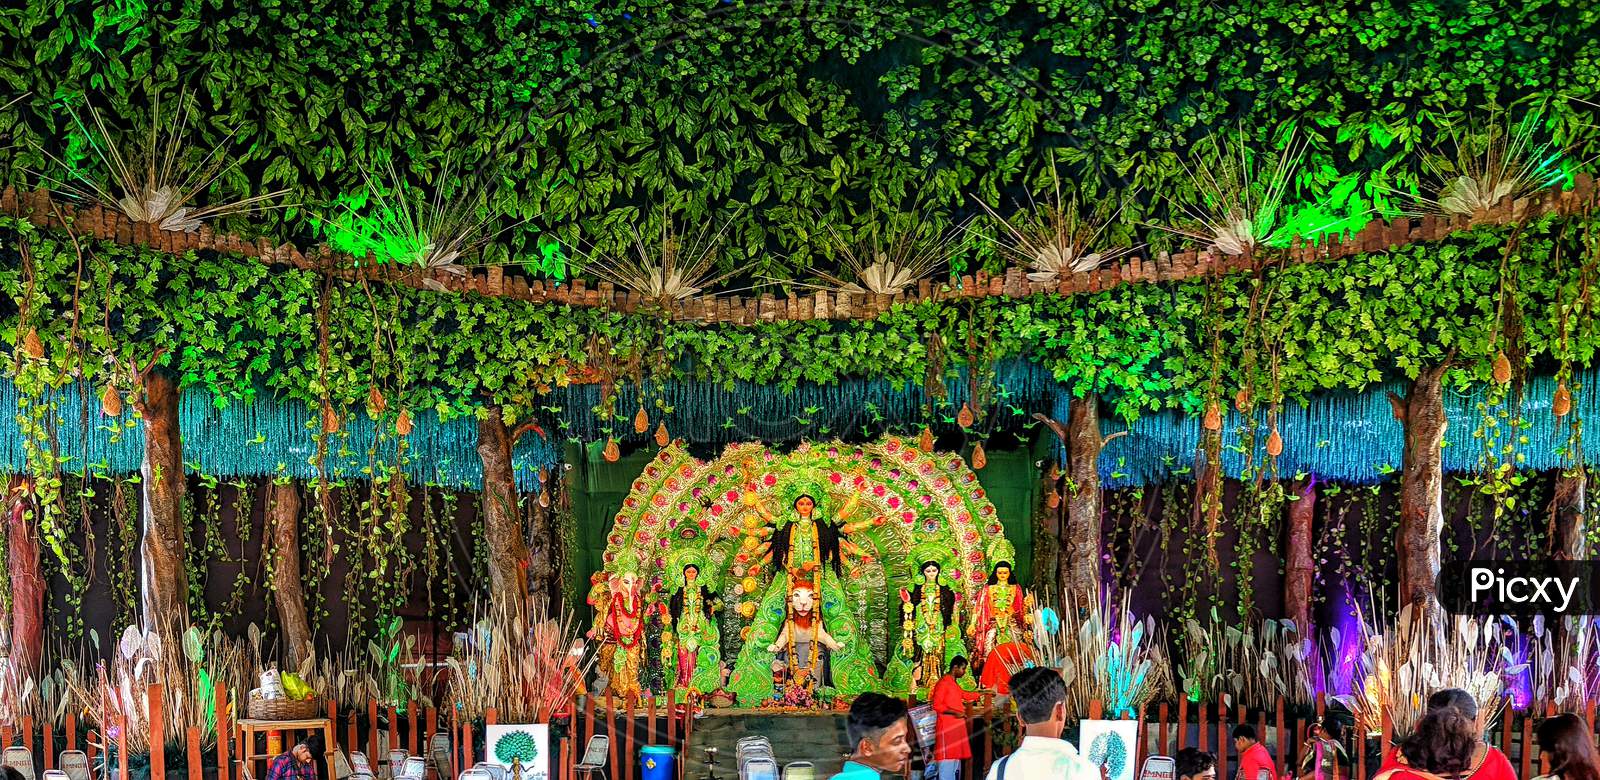 Beauty of durga, decoration of Kolkata durga puja. front face of durga, Festival lights at night, Art of kolkata durga puja